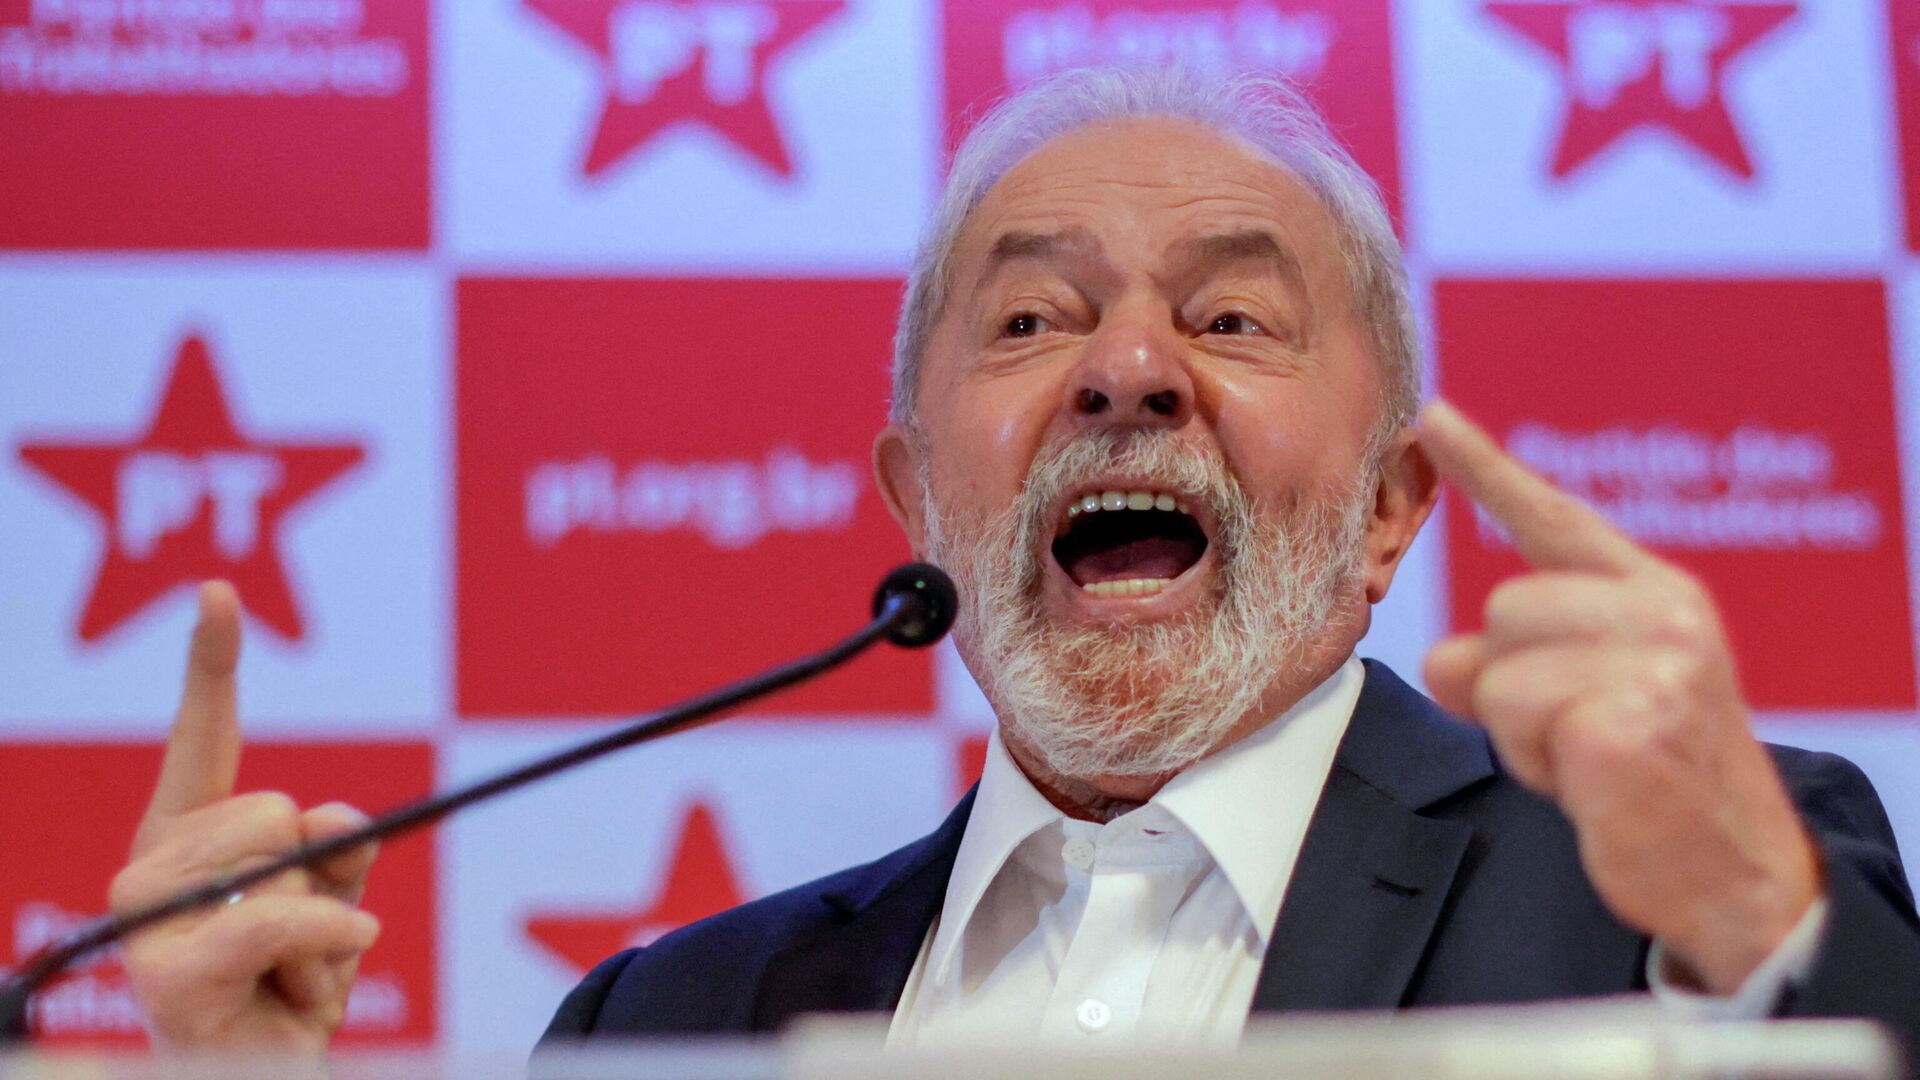 El expresidente brasileño, Luiz Inácio Lula da Silva (2003-2011) - Sputnik Mundo, 1920, 27.01.2022